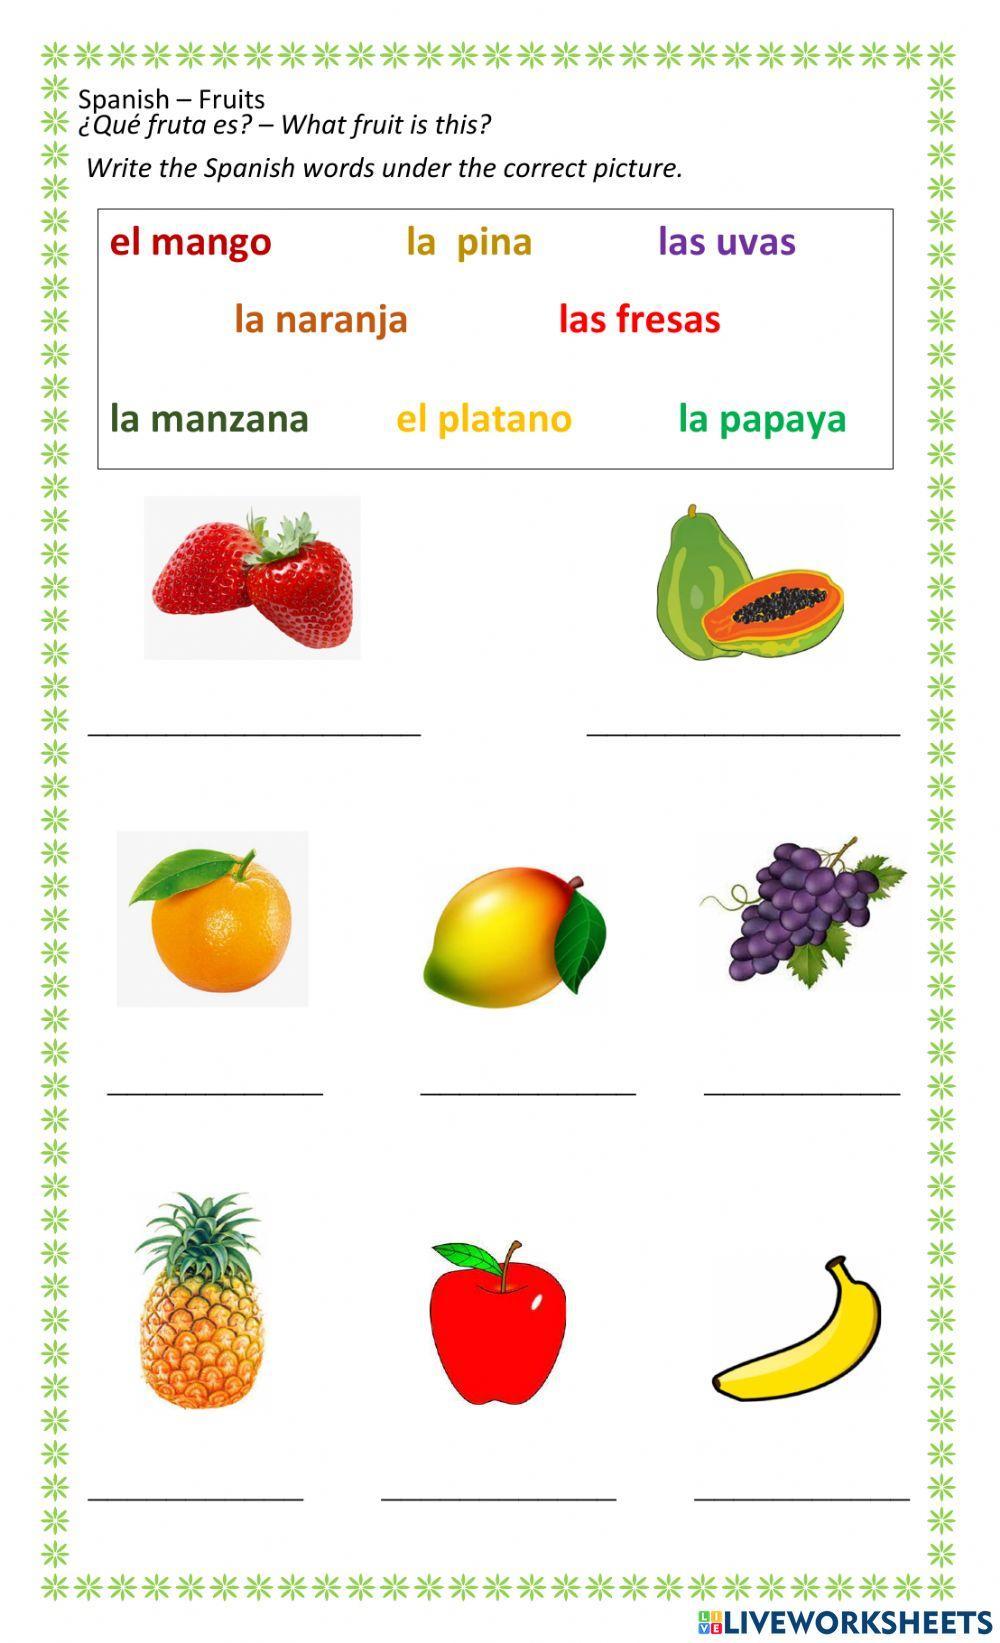 Spanish - Fruits